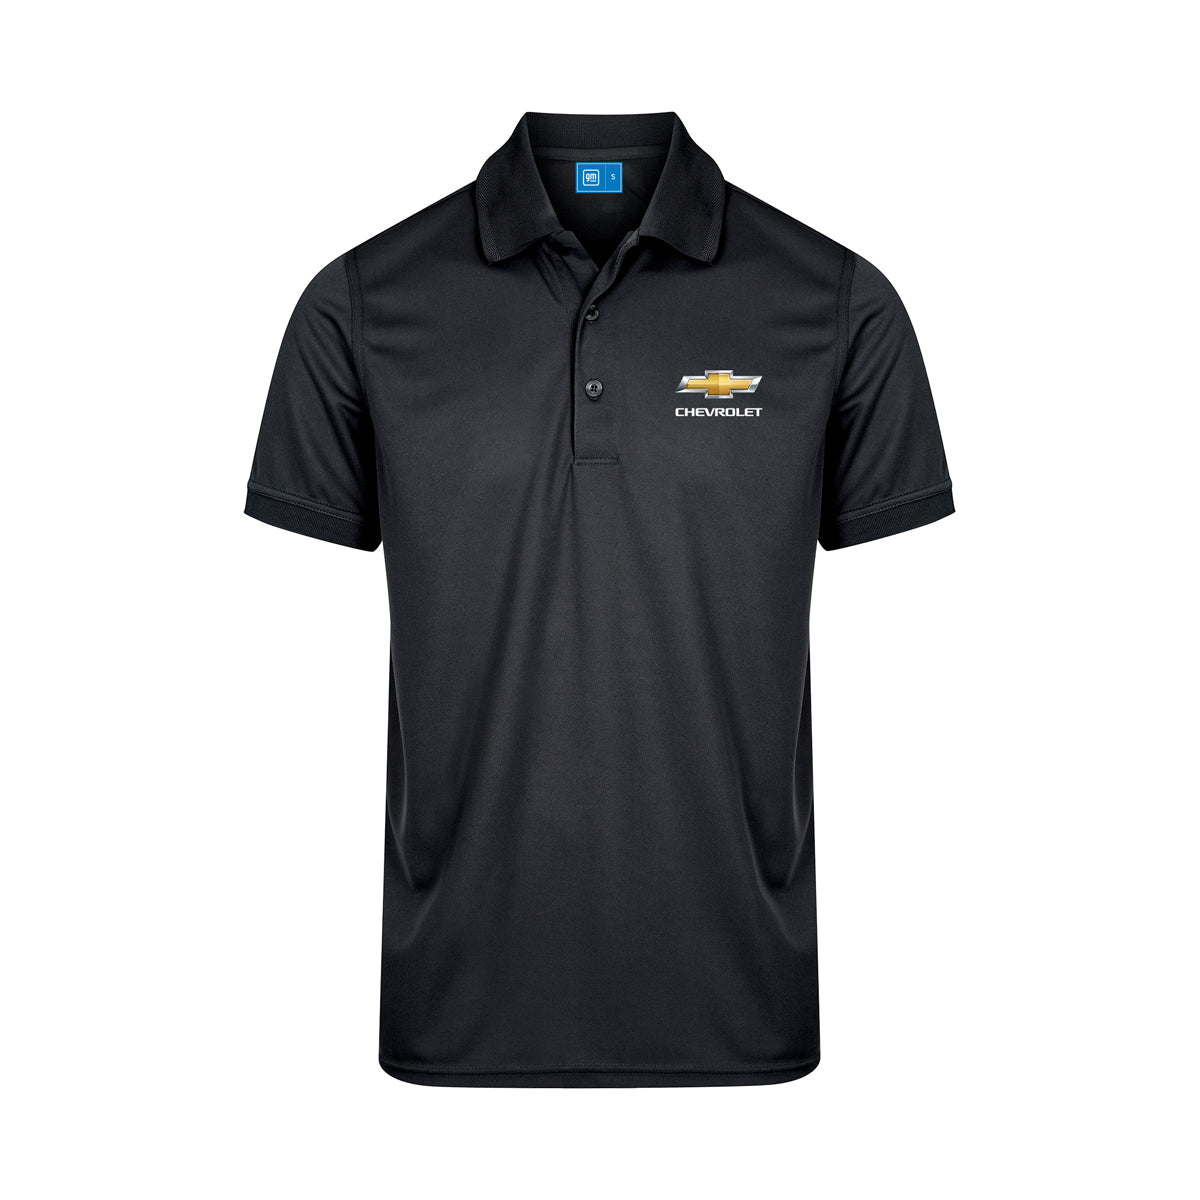 Chevrolet Polo Shirt Performance Black